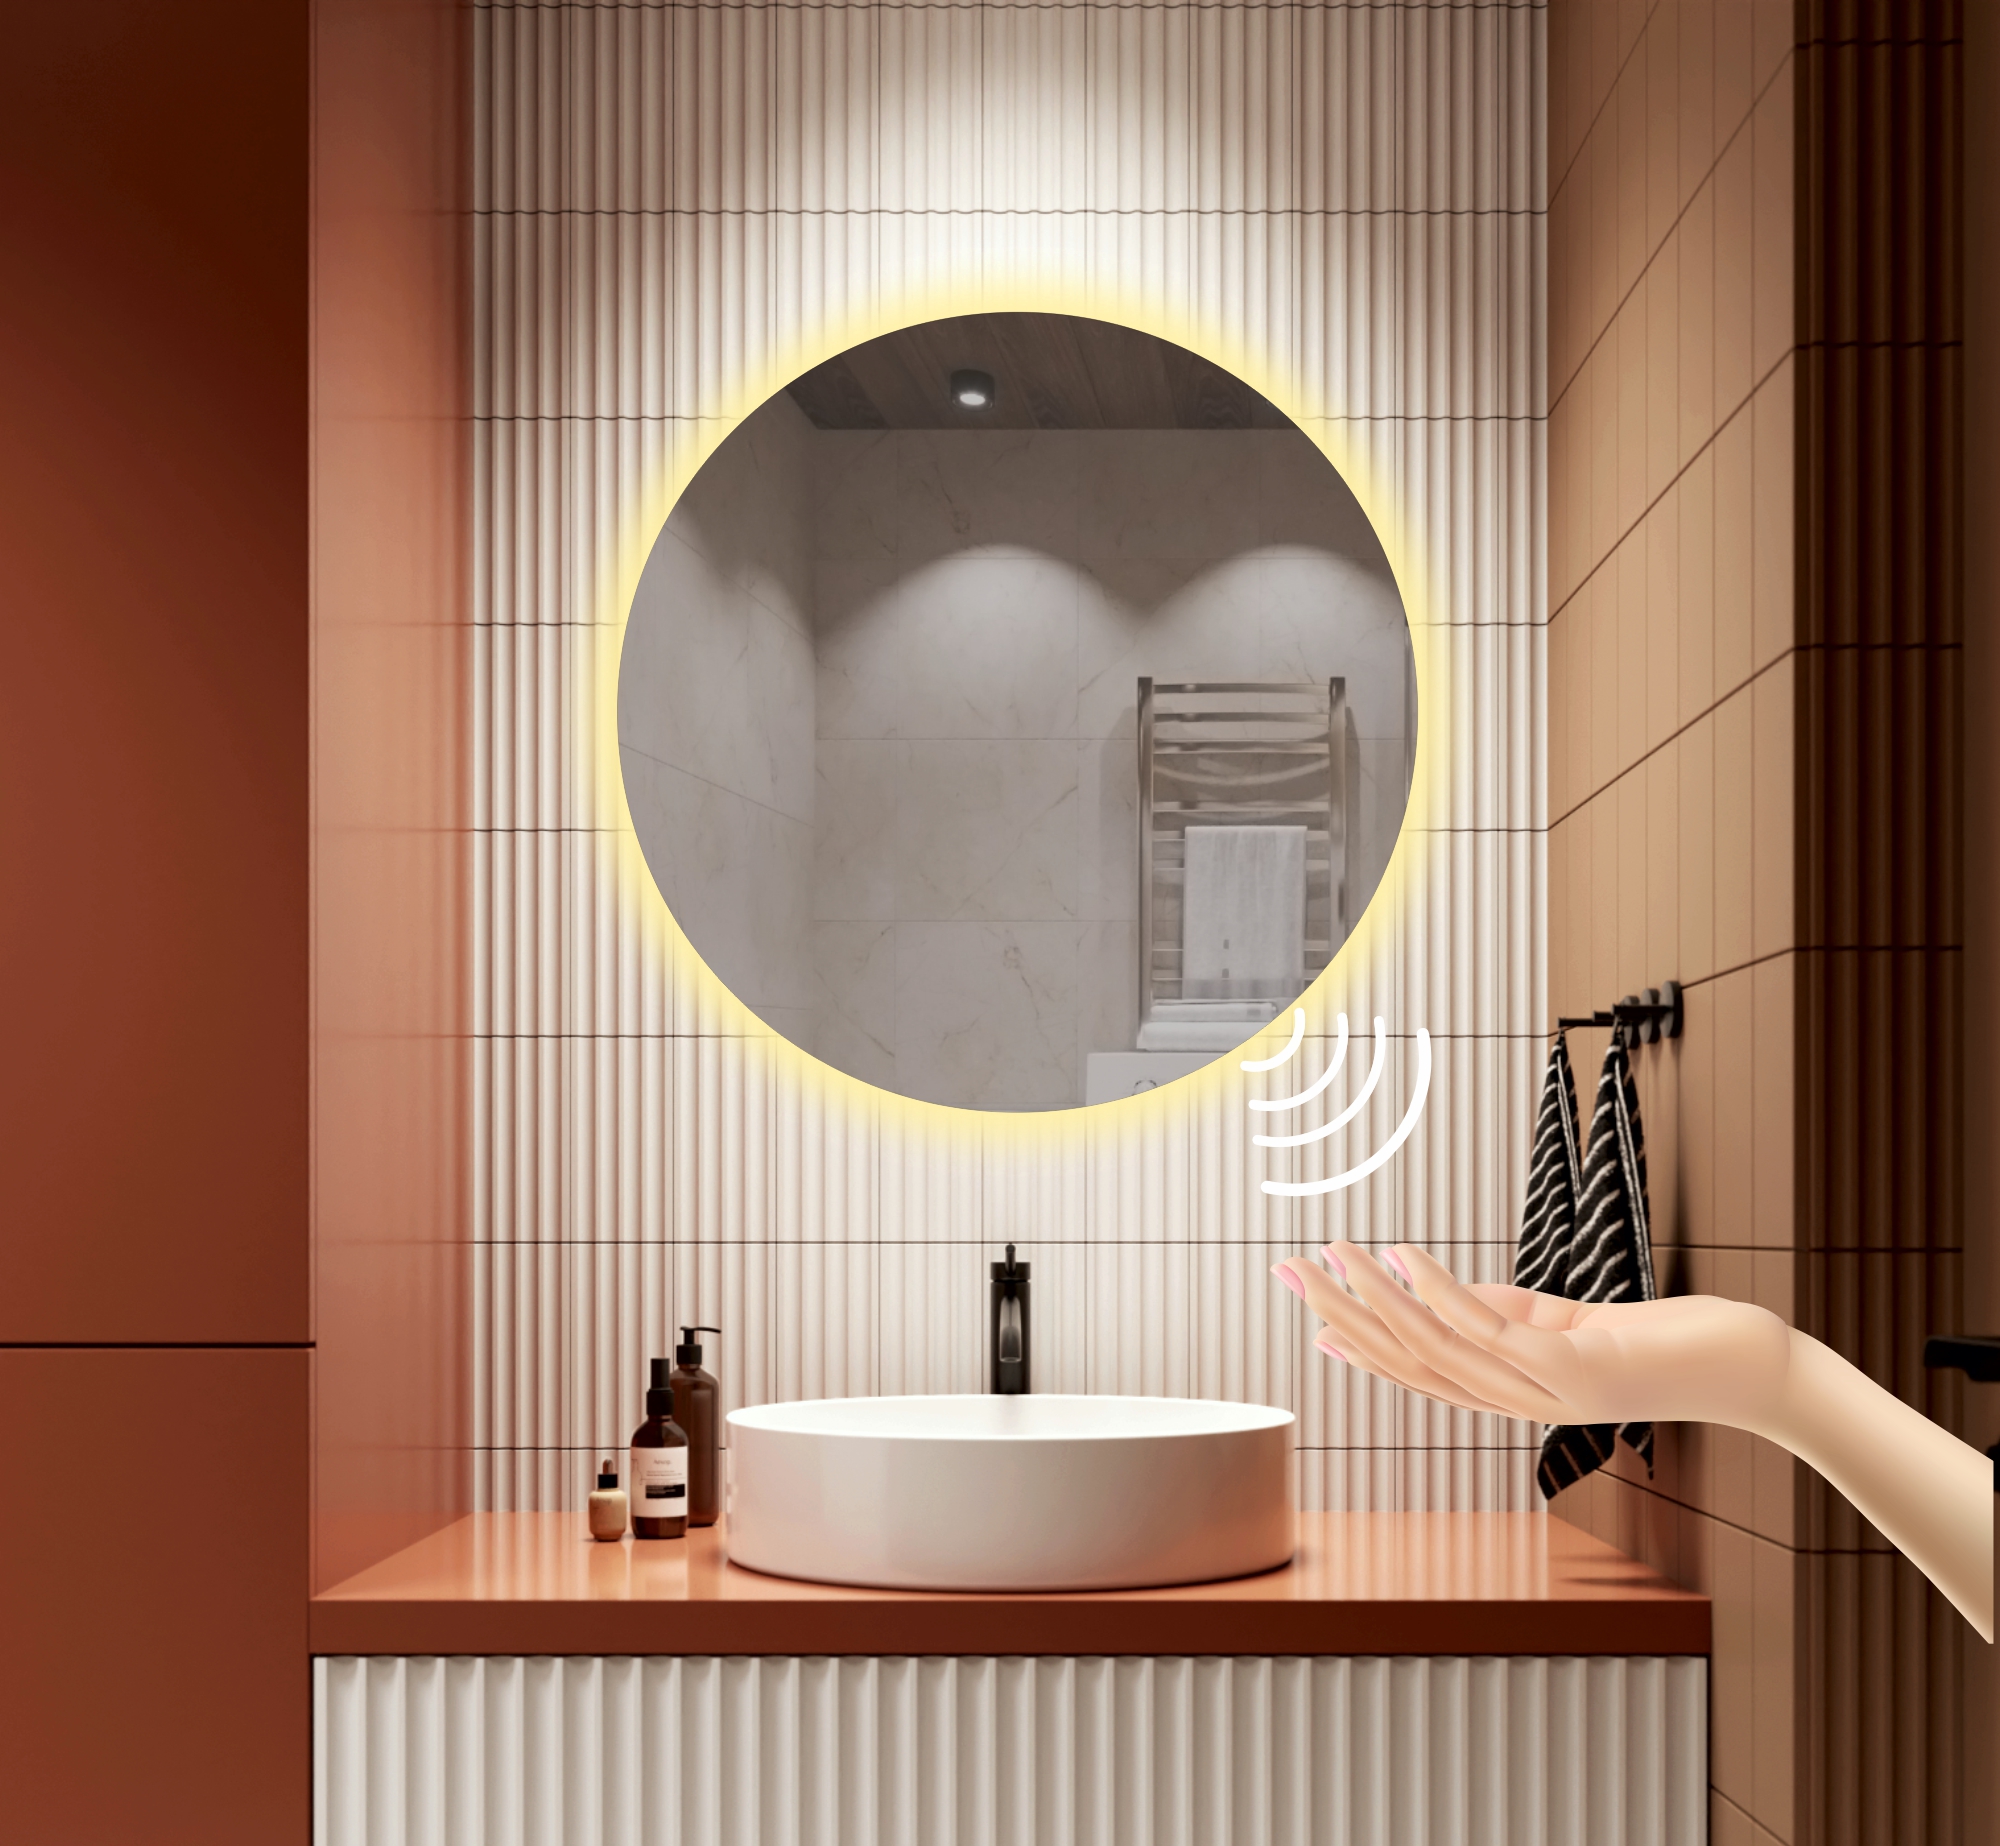 Зеркало для ванной Alfa Mirrors с теплой подсветкой 3200К круглое 80см, арт. Na-8Vzt